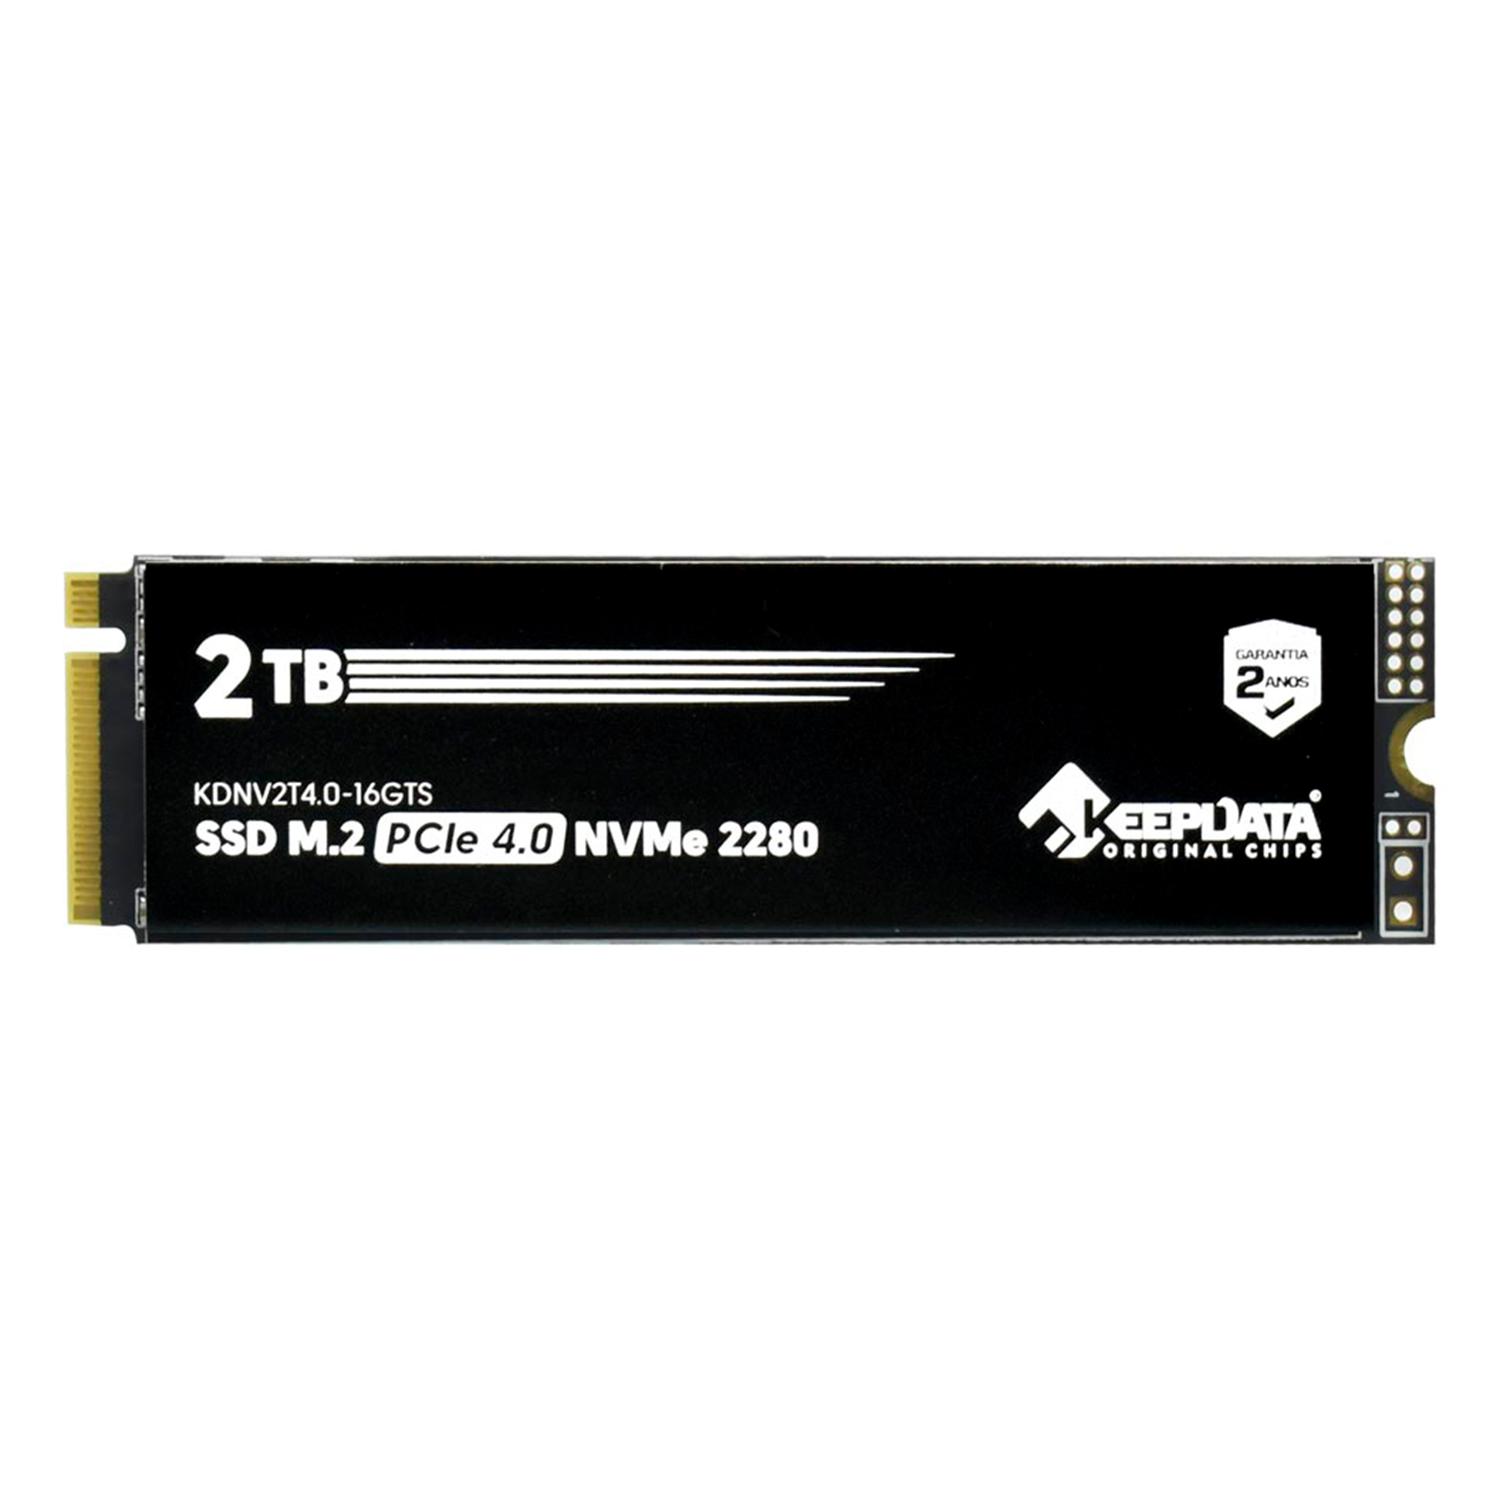 SSD M.2 Keepdata 2TB NVMe PCIe 4.0 - KDNV2T4.0-16GTS